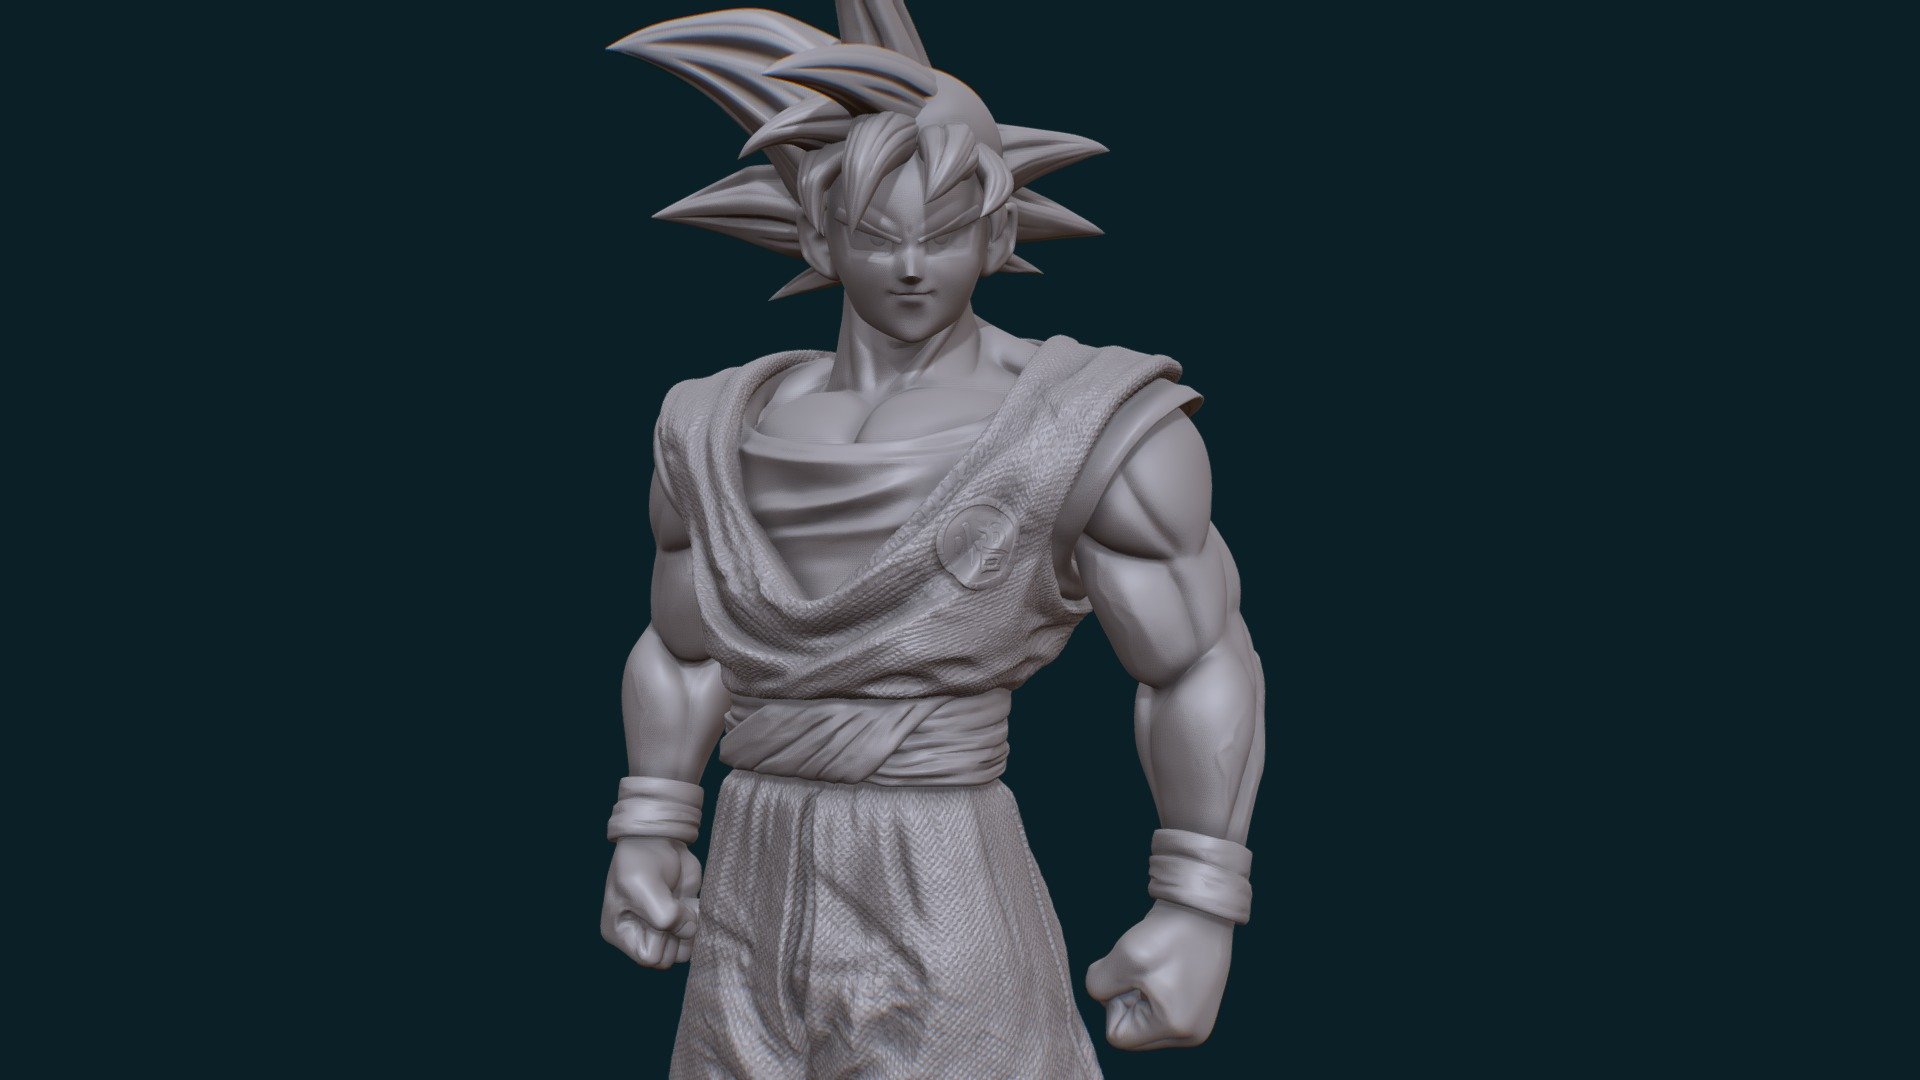 goku model, decimated an ready to print.
https://www.artstation.com/marketplace/p/Nejk/ready-to-print-goku-supported-stl - Goku to print - 3D model by juanelias 3d model